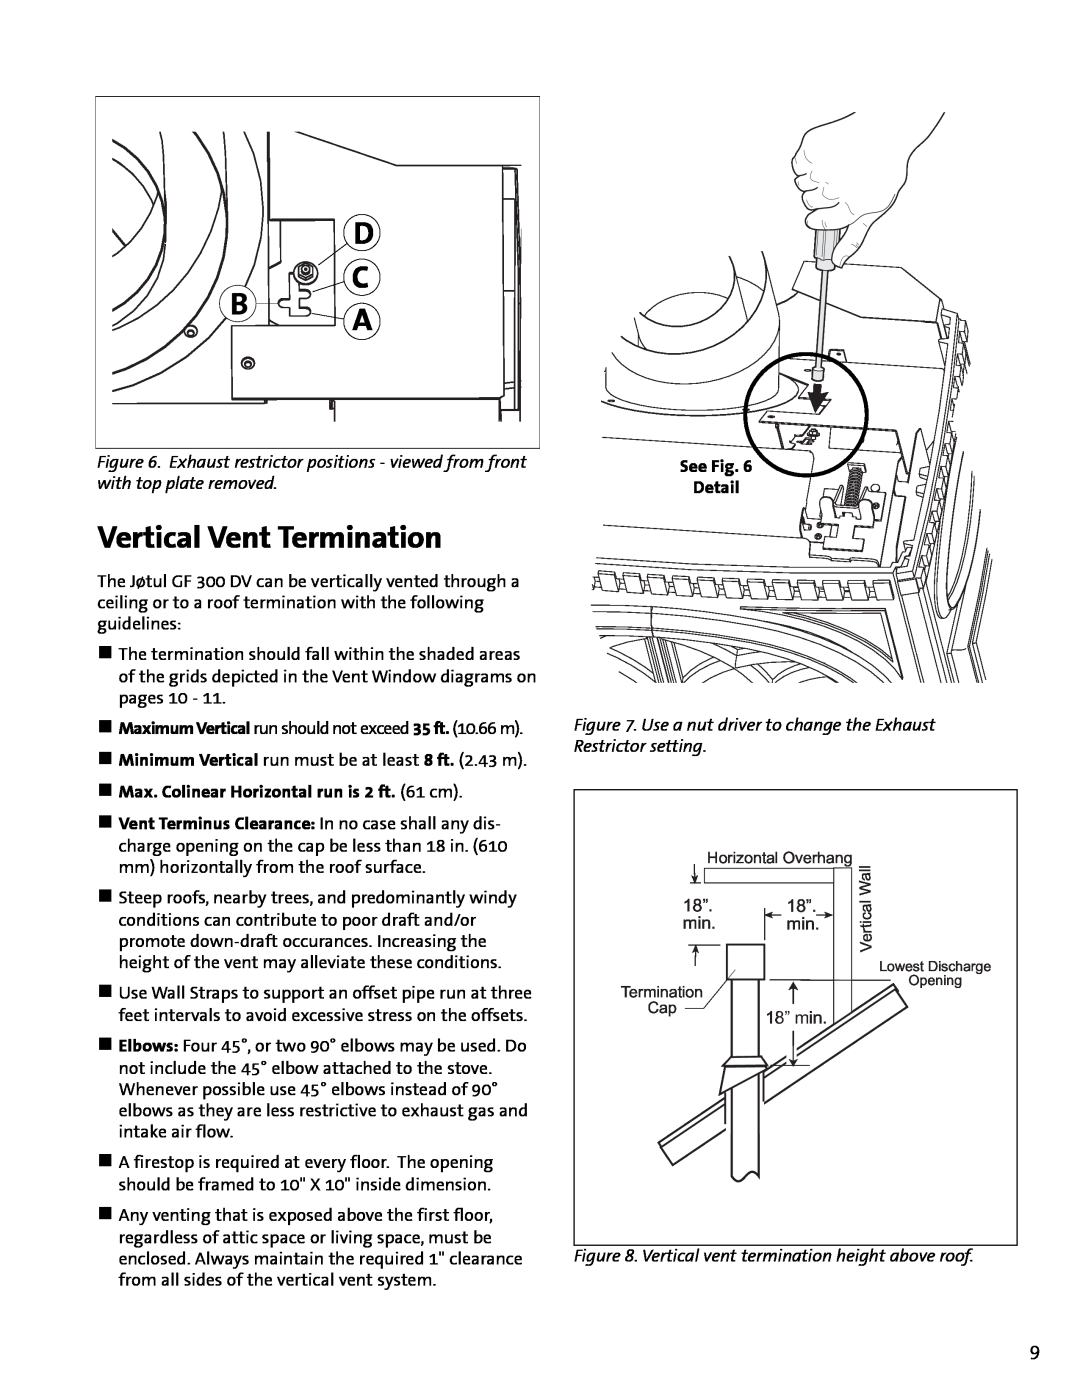 Jotul GF300 DV manual Vertical Vent Termination 